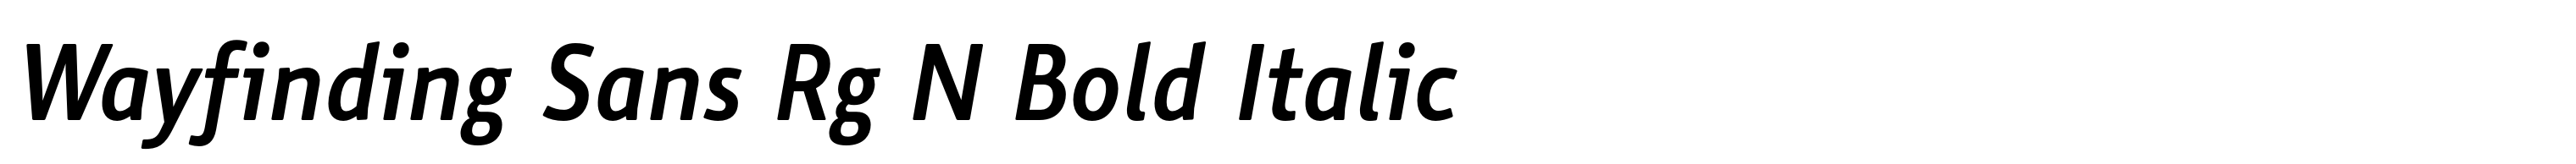 Wayfinding Sans Rg N Bold Italic